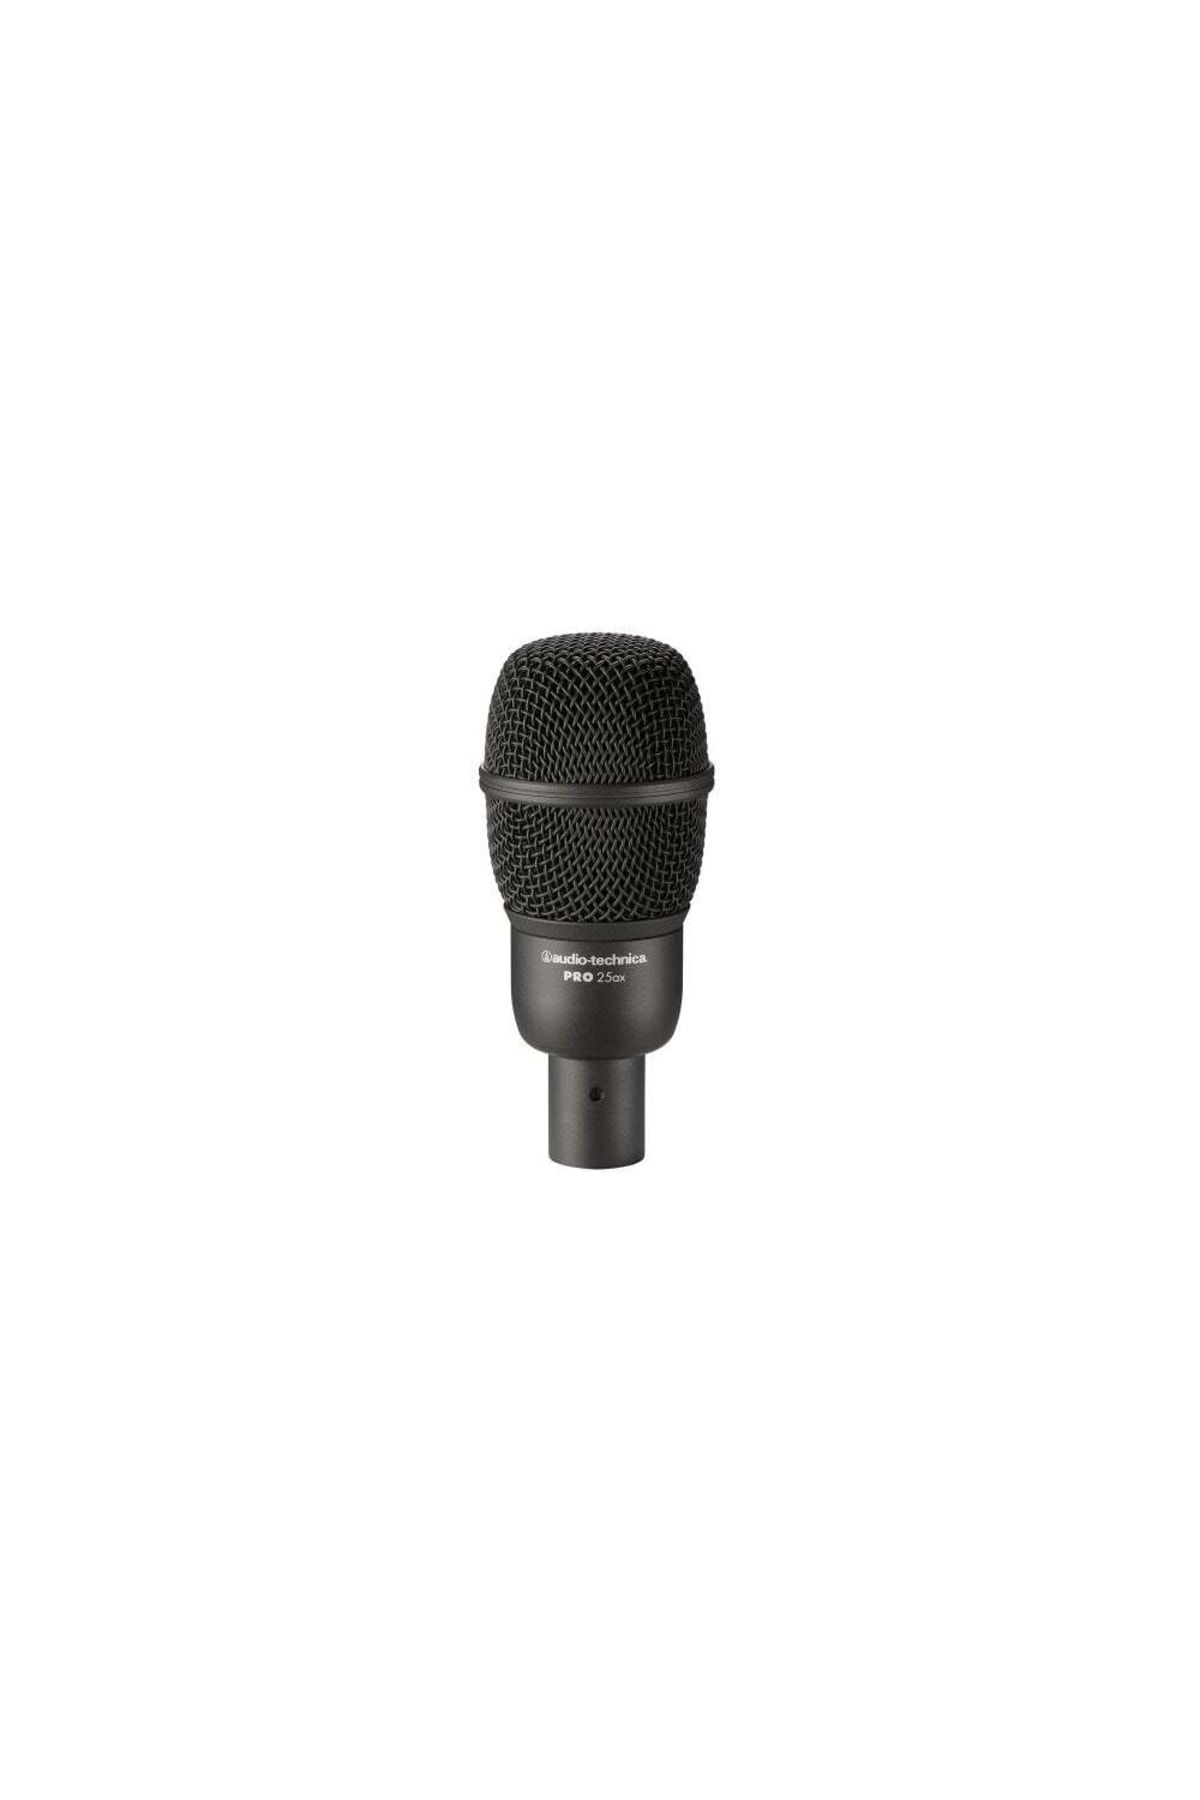 Audio Technica Audio-technica Pro 25ax Dinamik Mikrofon